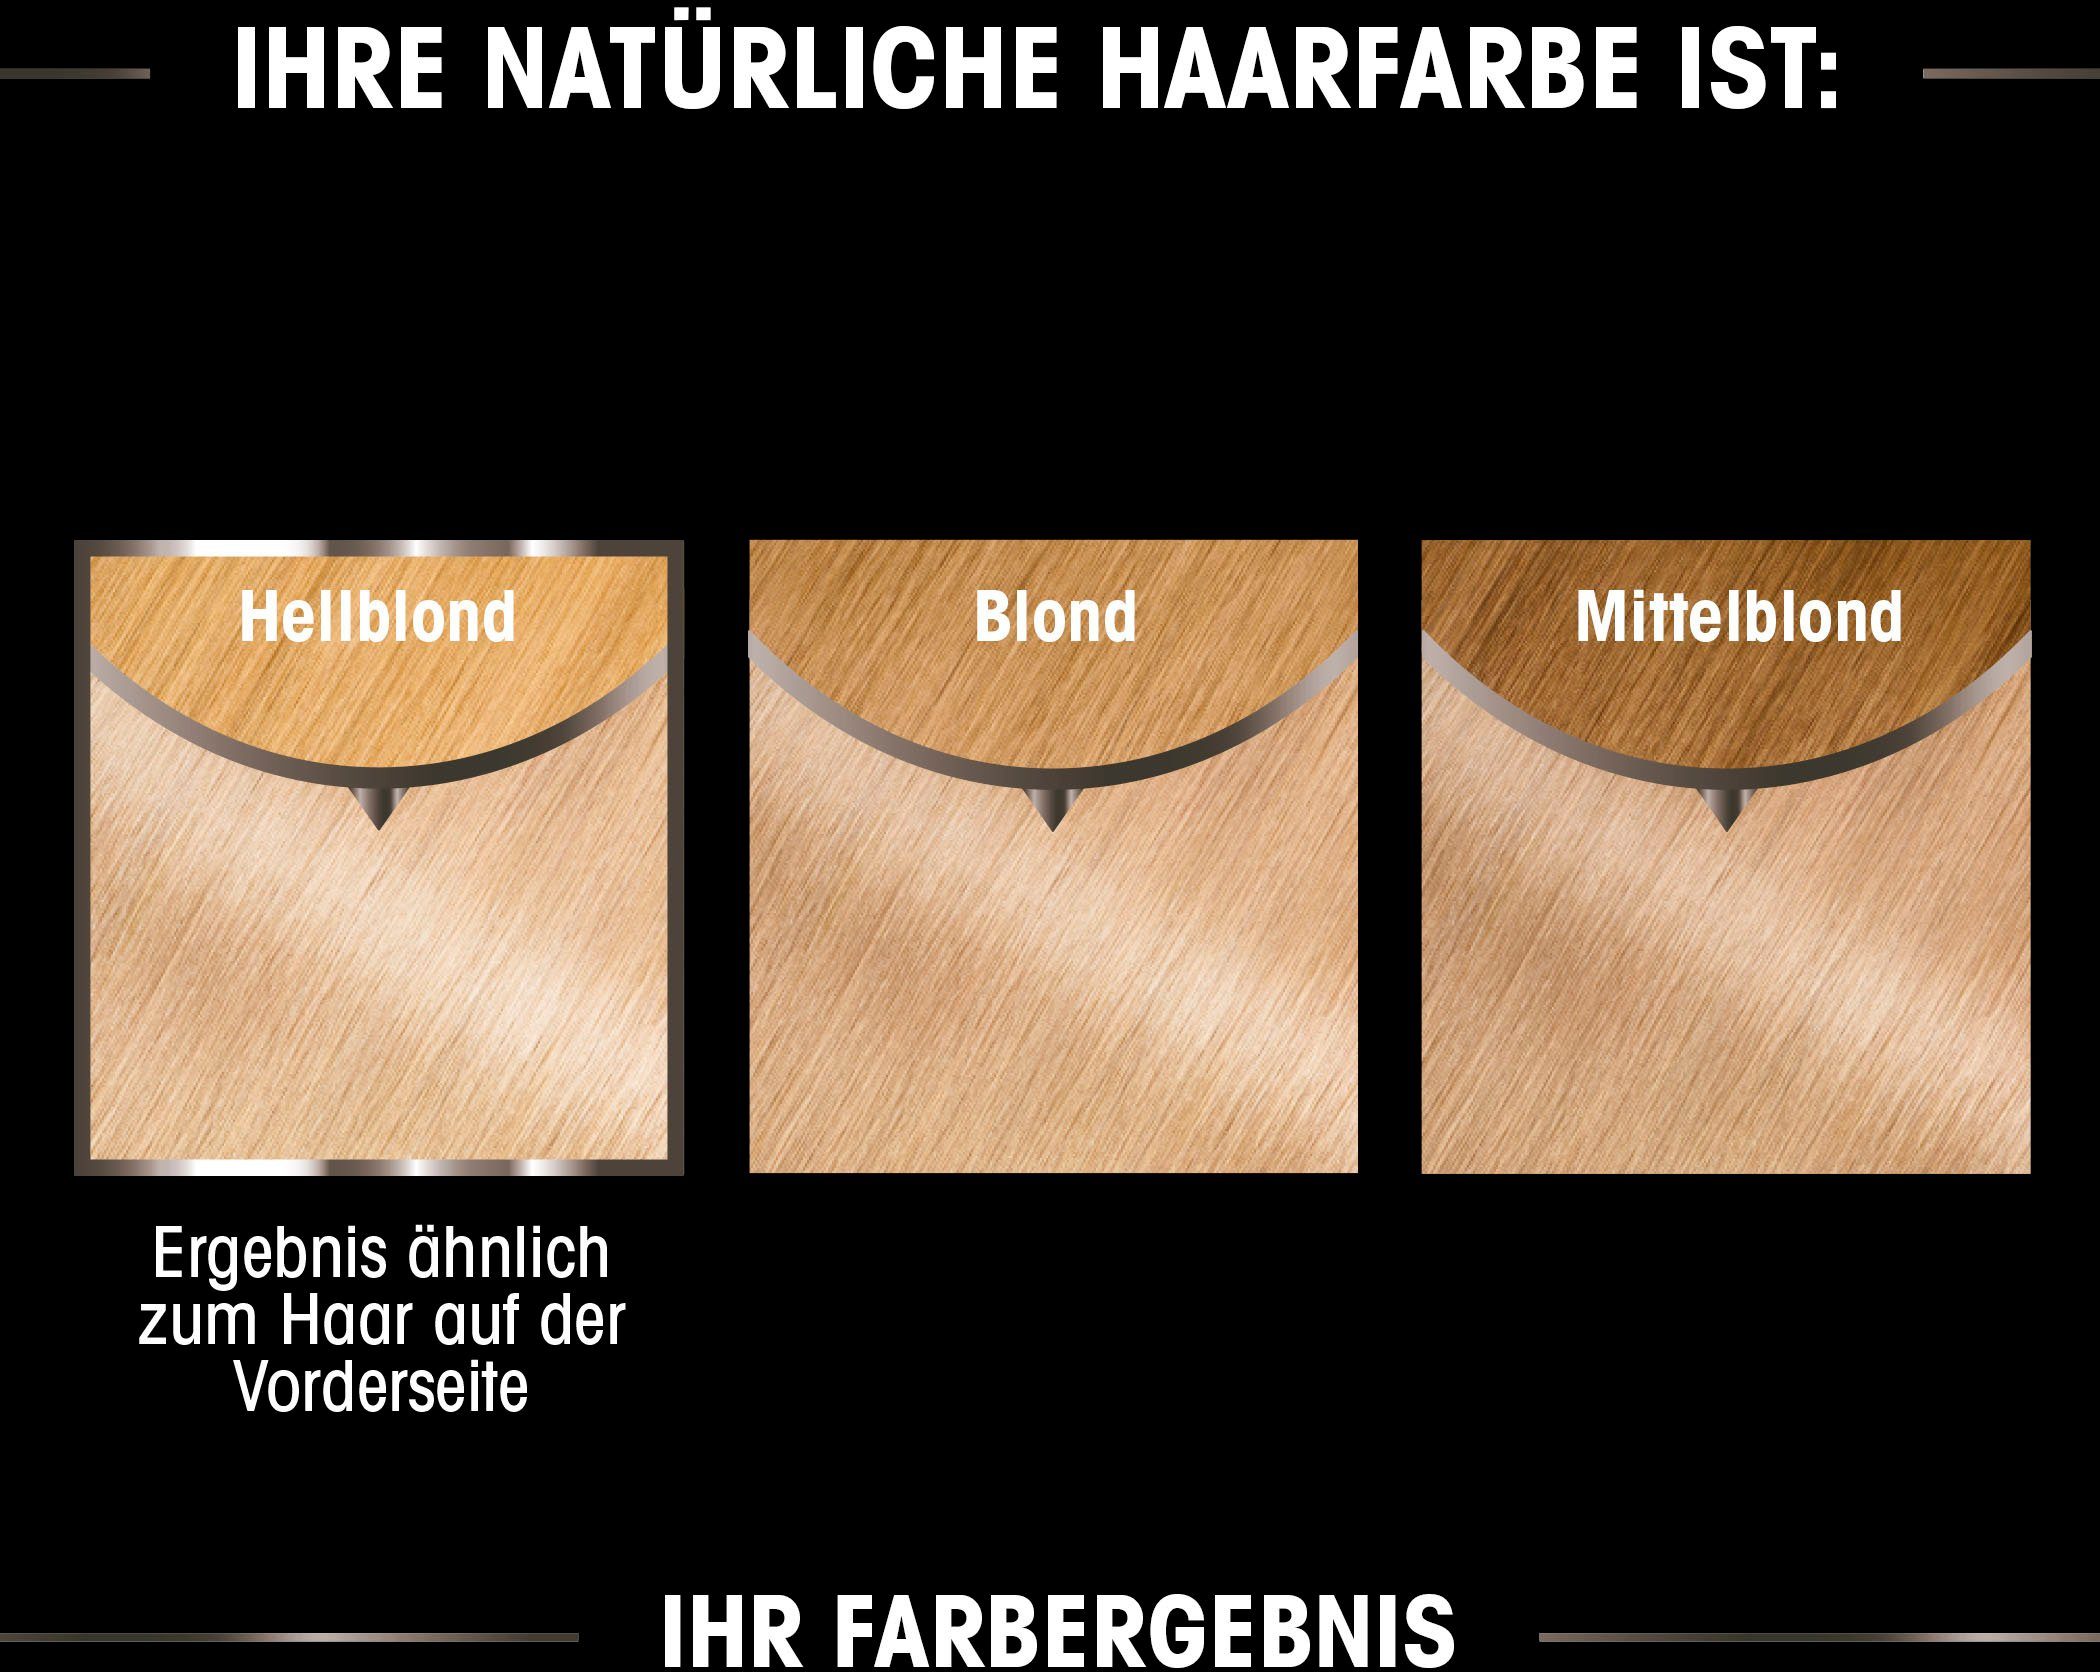 GARNIER Coloration Garnier Olia Set, Ölbasis Haarfarbe, 3-tlg., dauerhafte